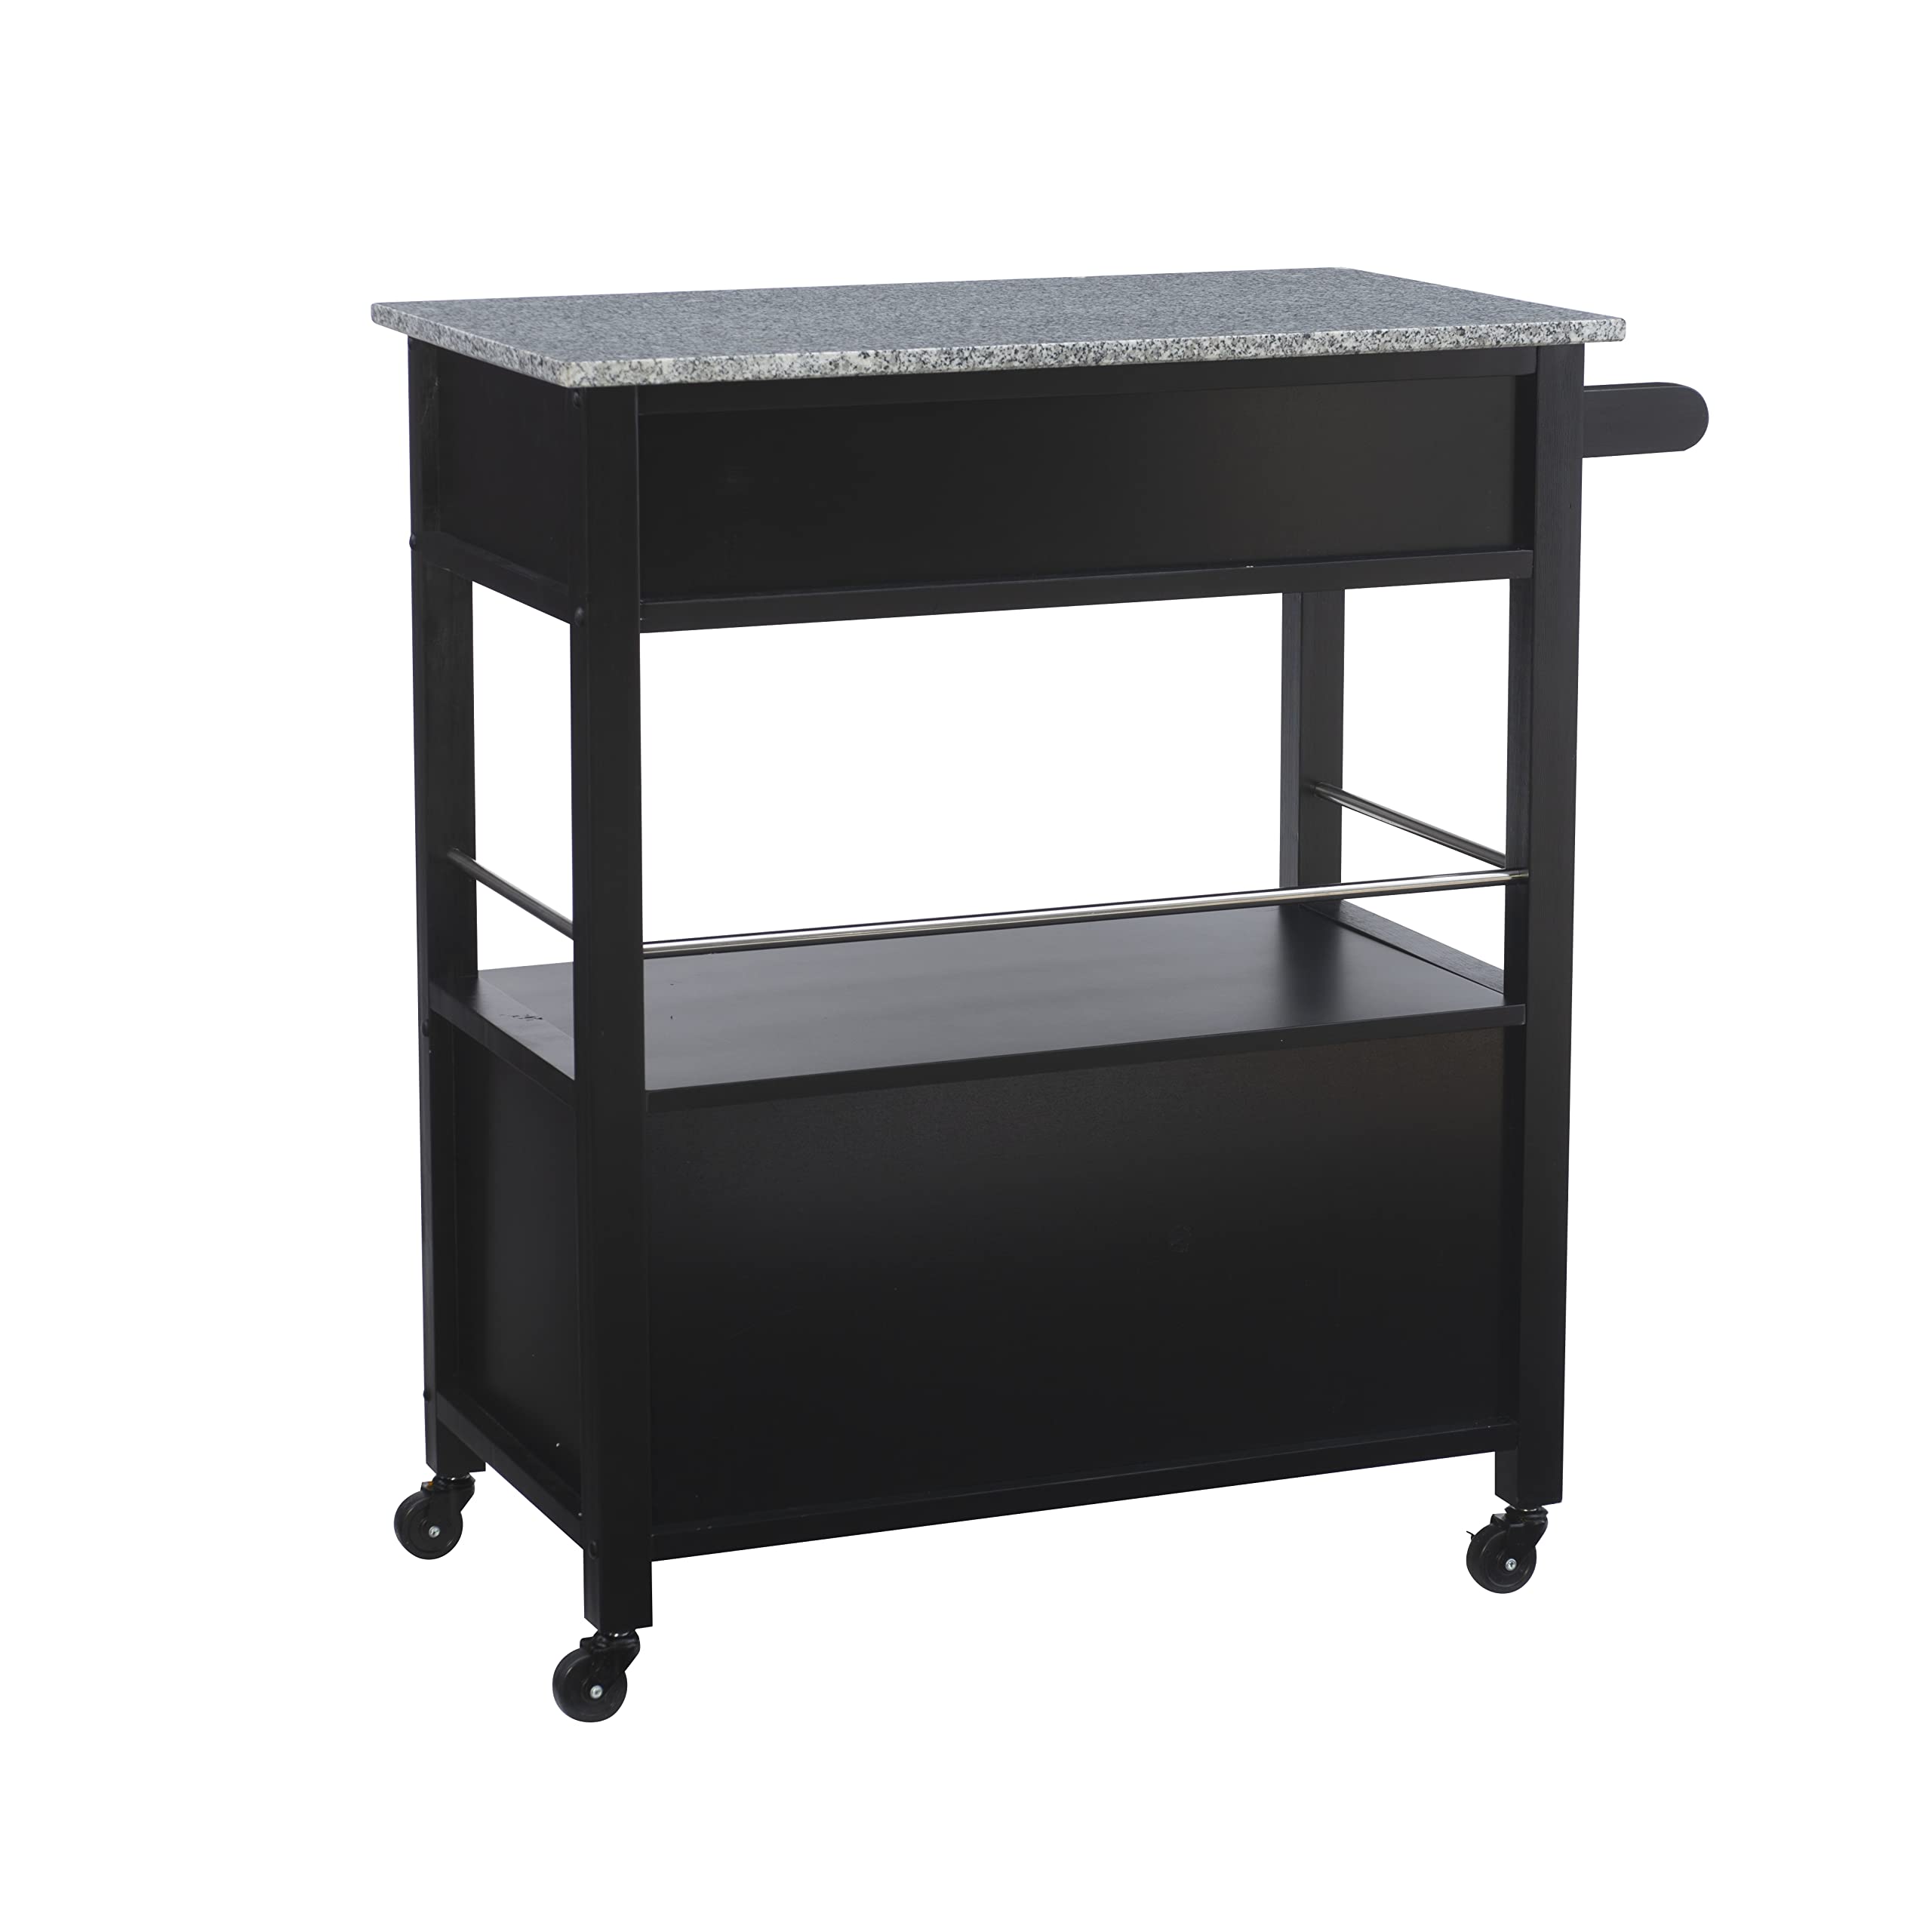 Linon cameron granite Top Kitchen cart, 3602 x 2402 x 1799, Black